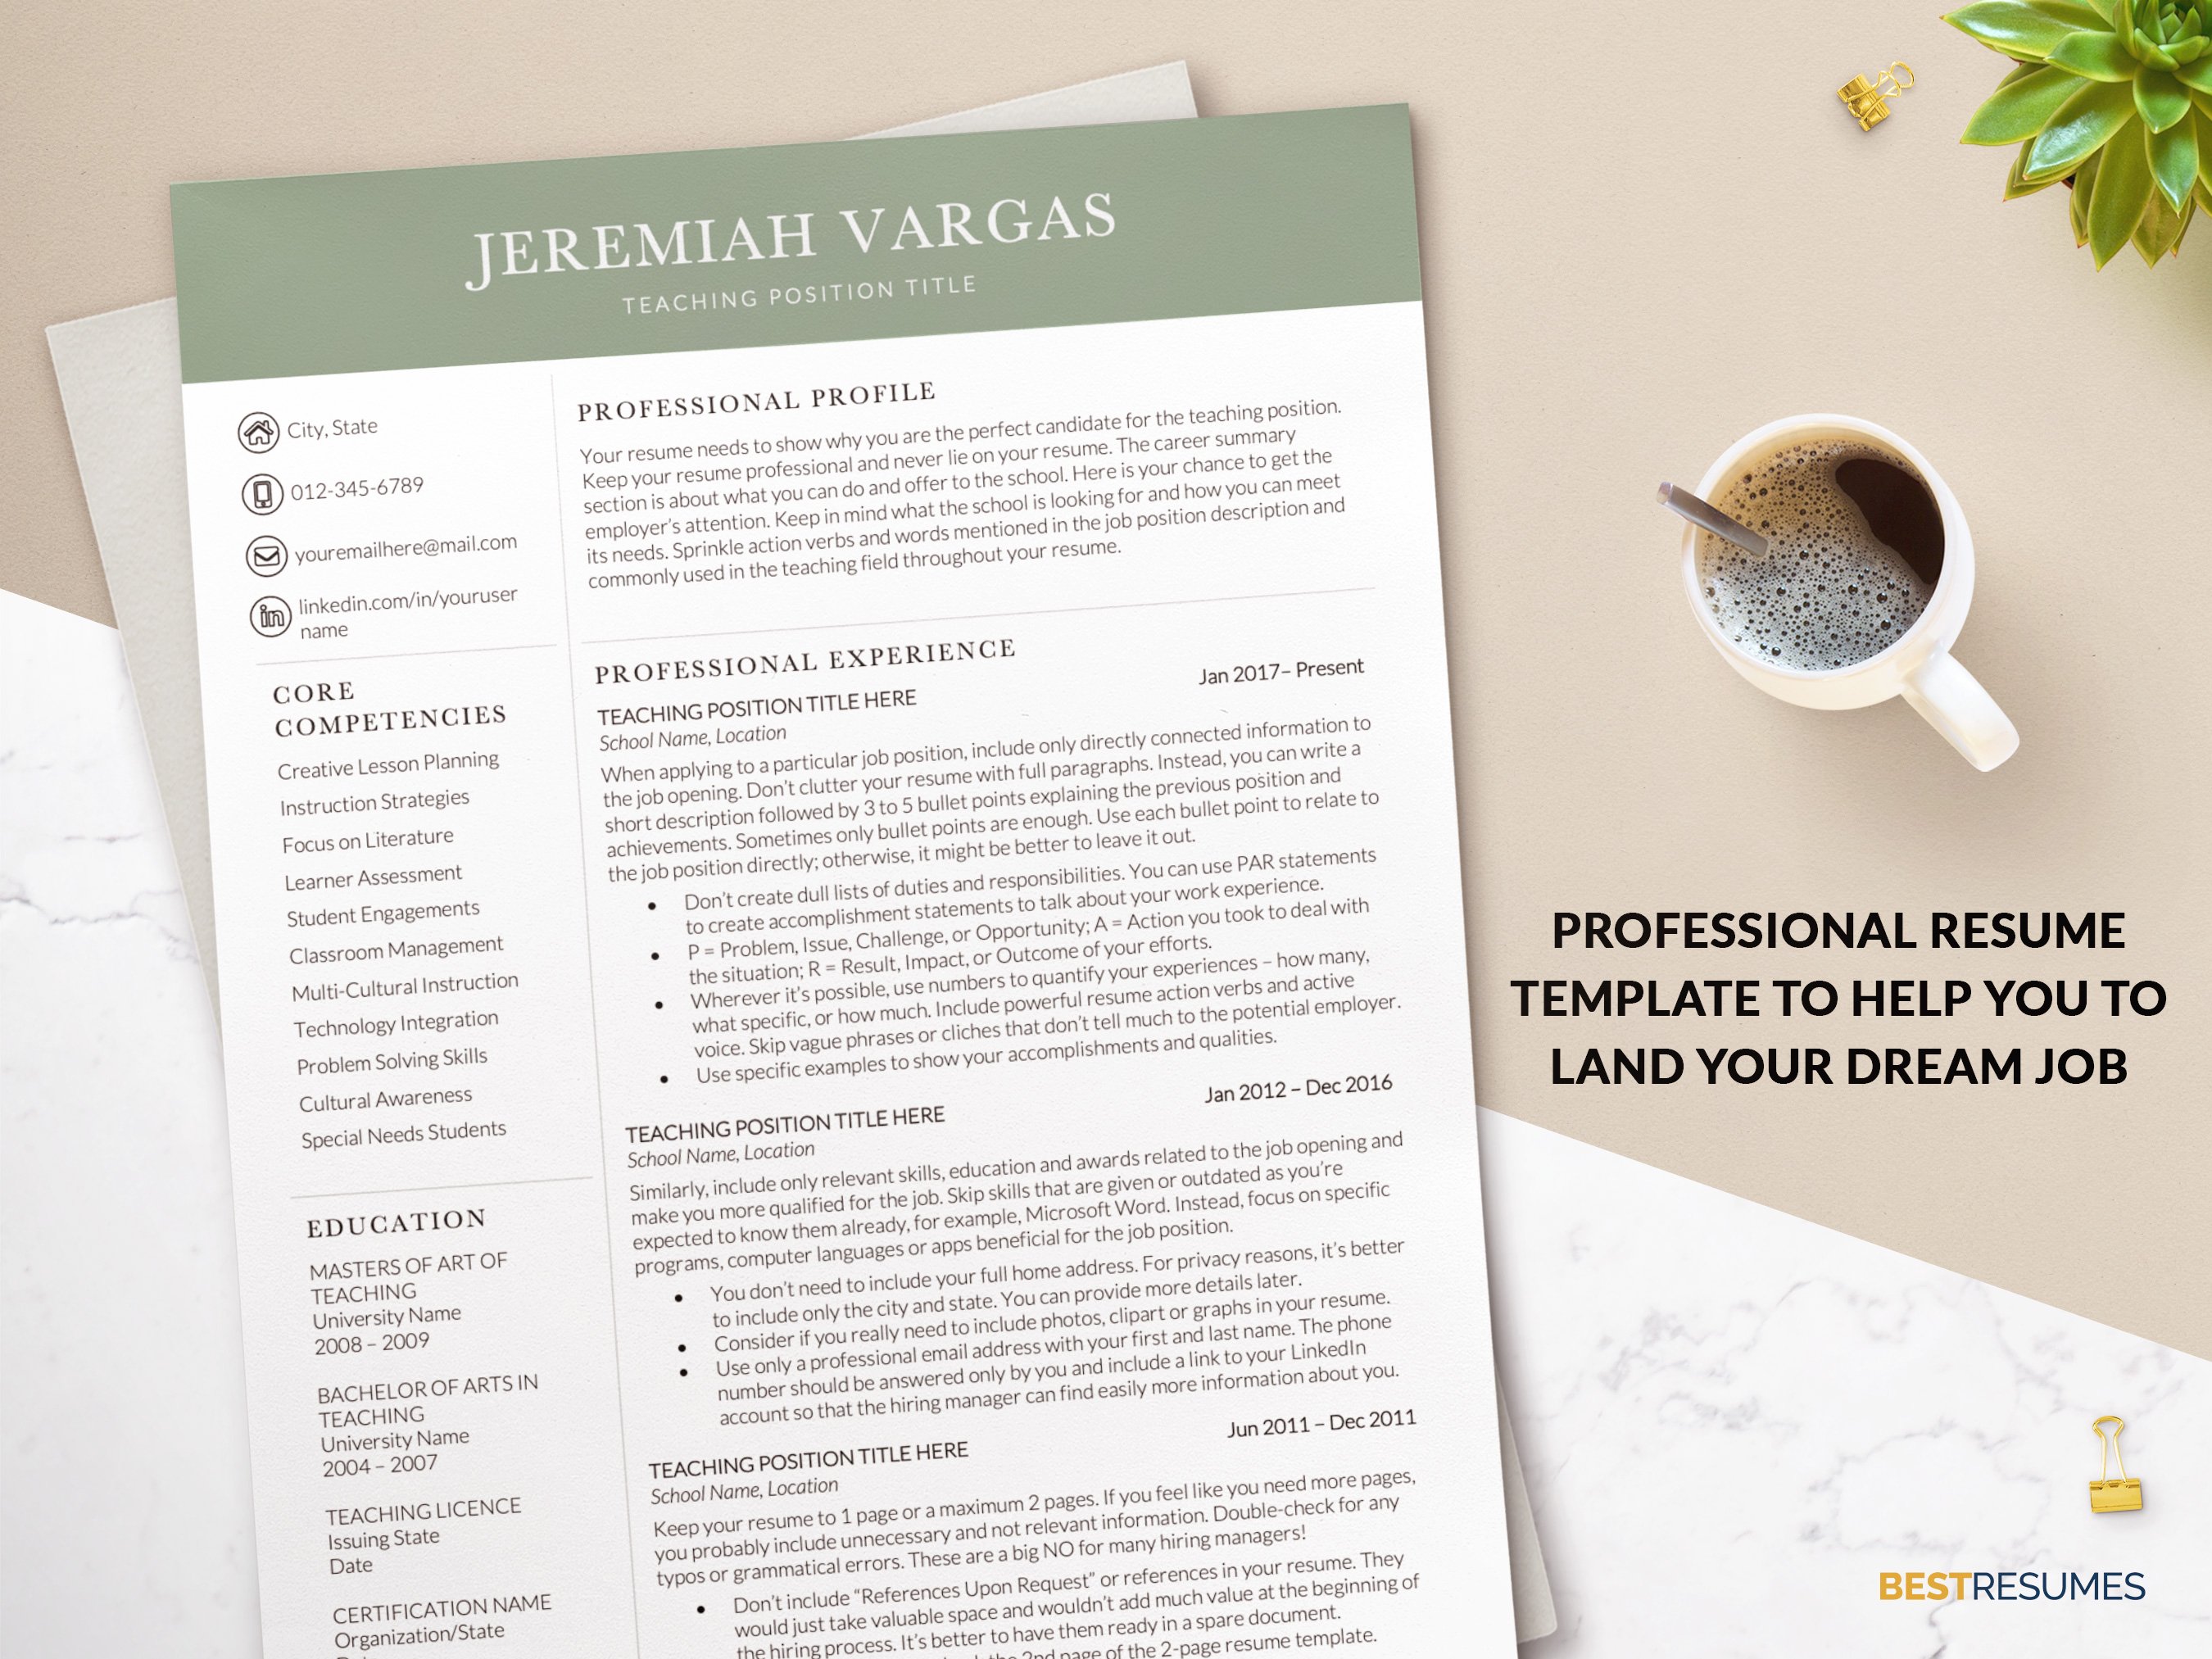 resume template for teachers professional resume template jeremiah vargas 446